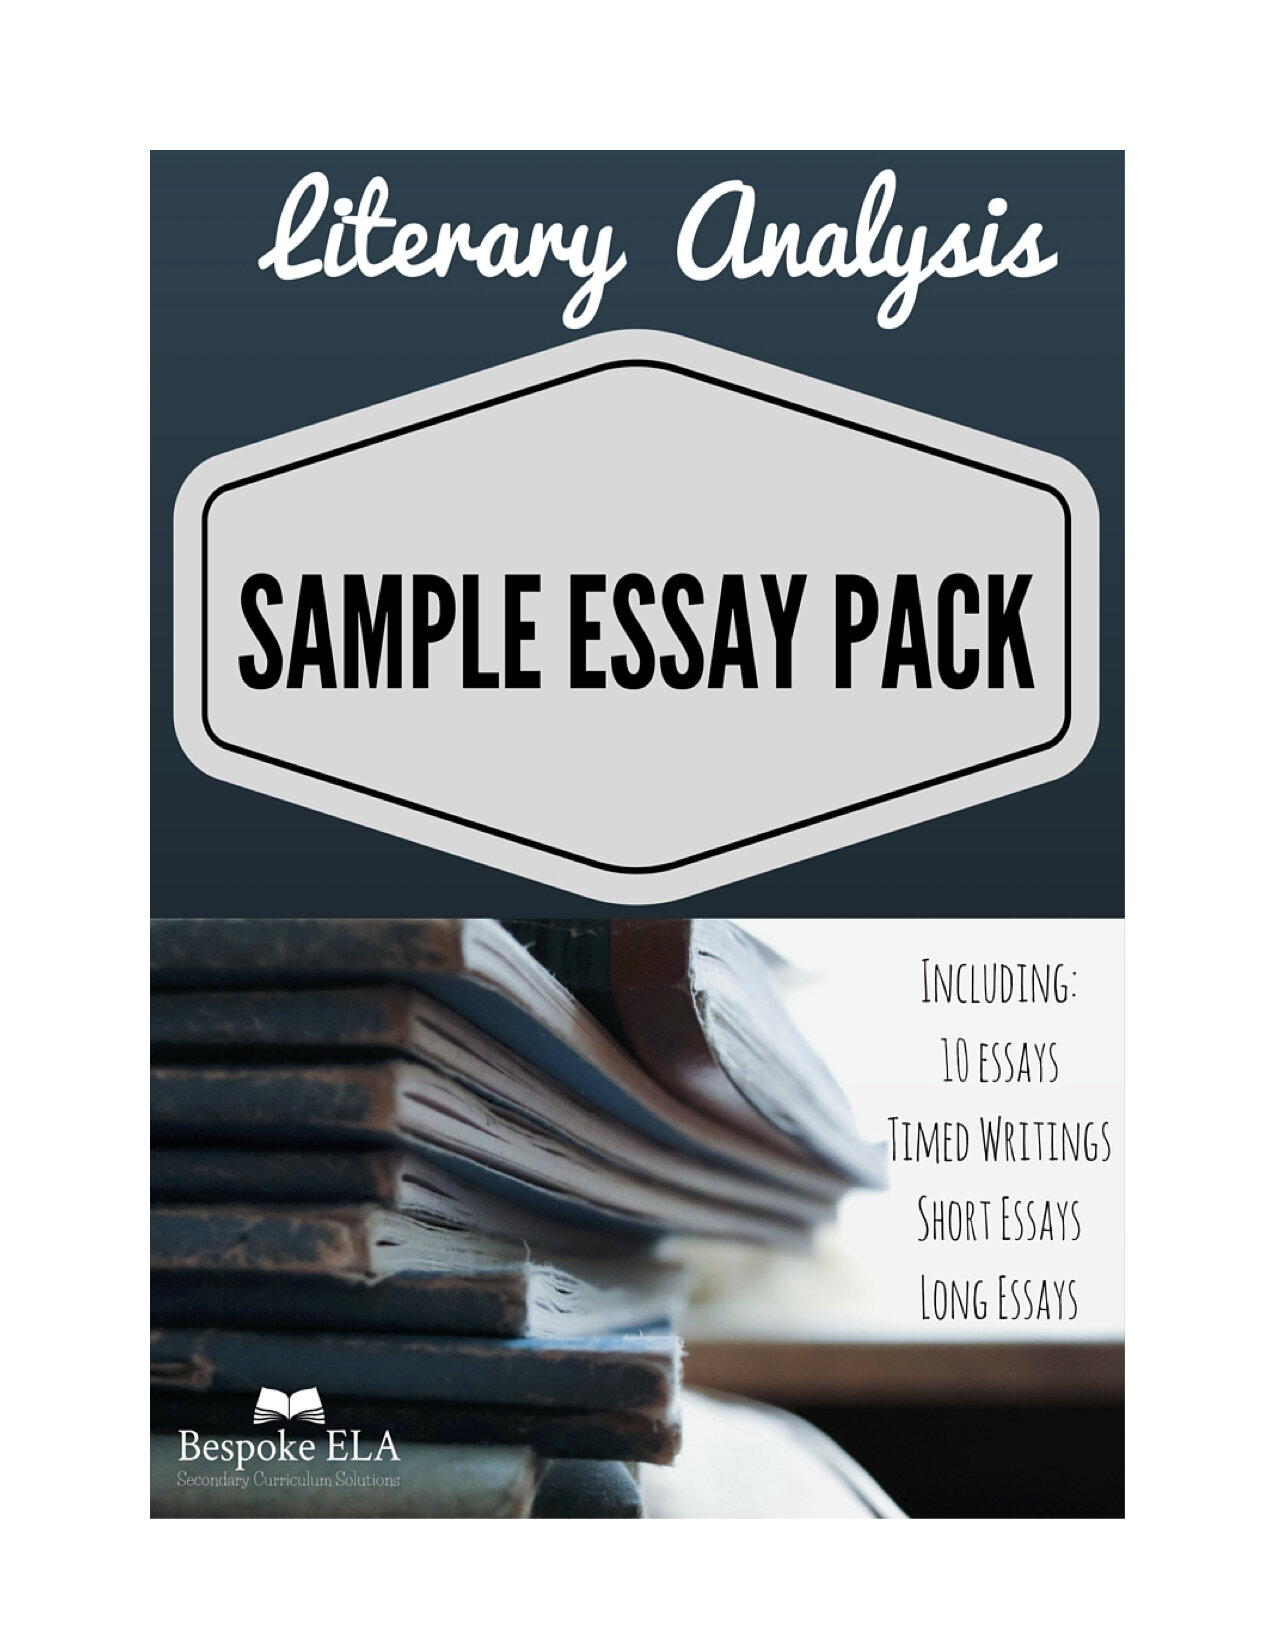 Literary Analysis SAMPLE ESSAY PACK by Bespoke ELA1.jpg